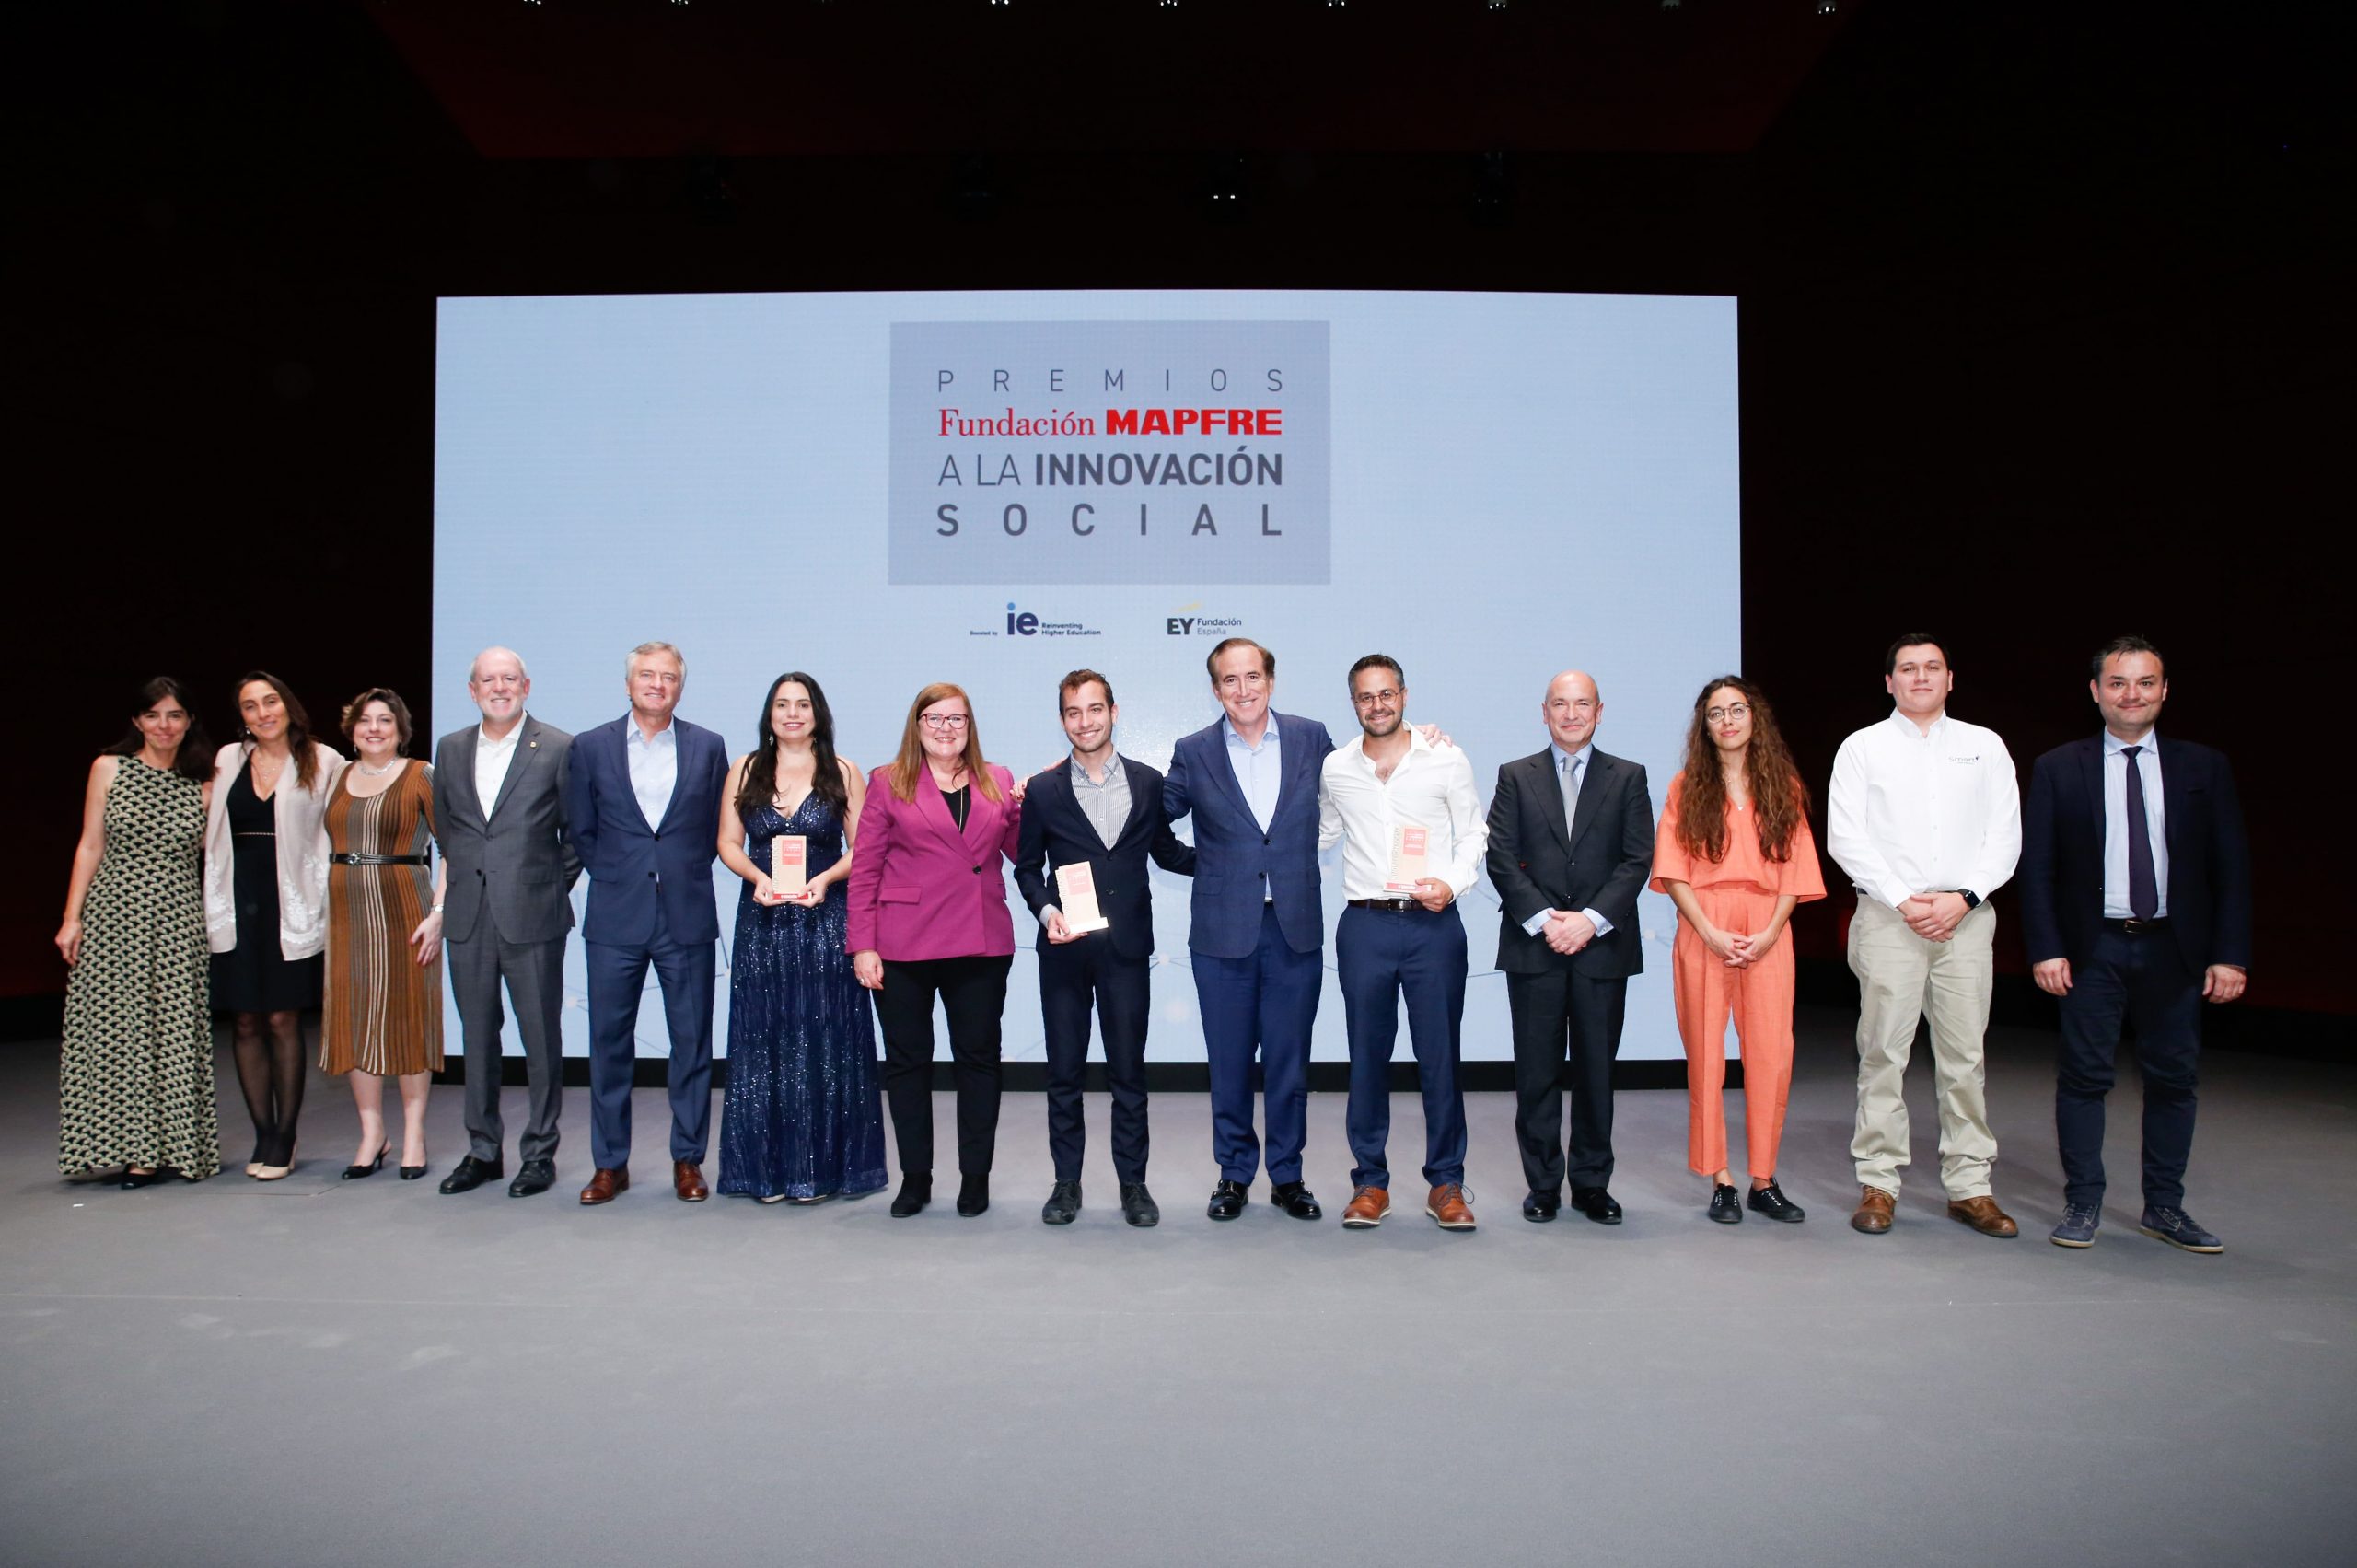 Fundación Mapfre awards three major international social transformation projects - #BHHMembersInitiatives